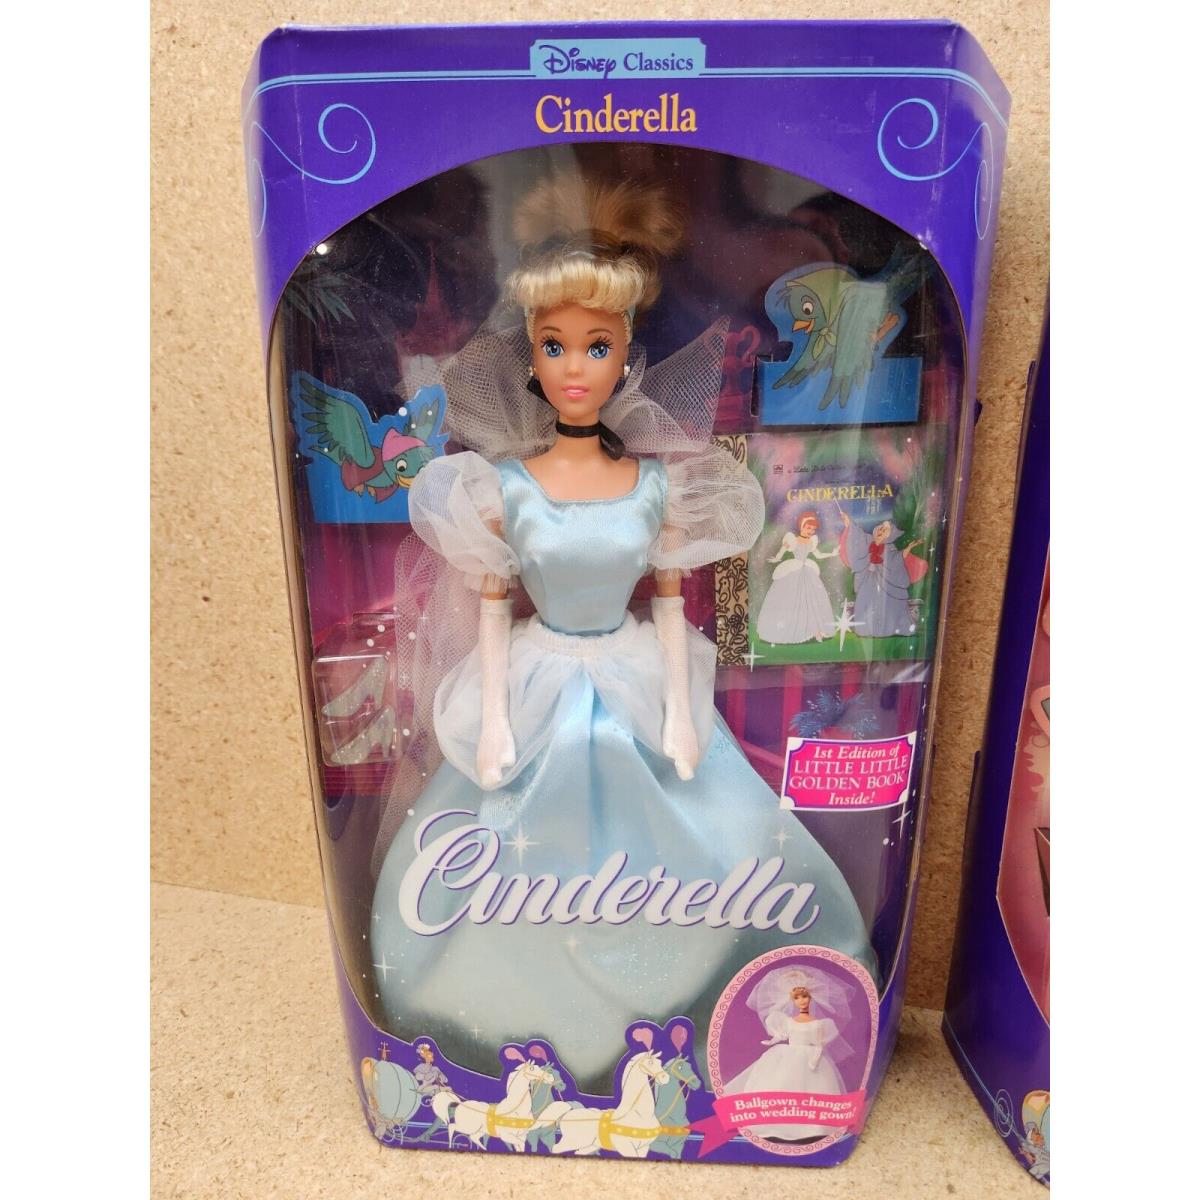 Vintage 1991 Mattel Disney Classics Cinderella 1624 Prince Charming 1625